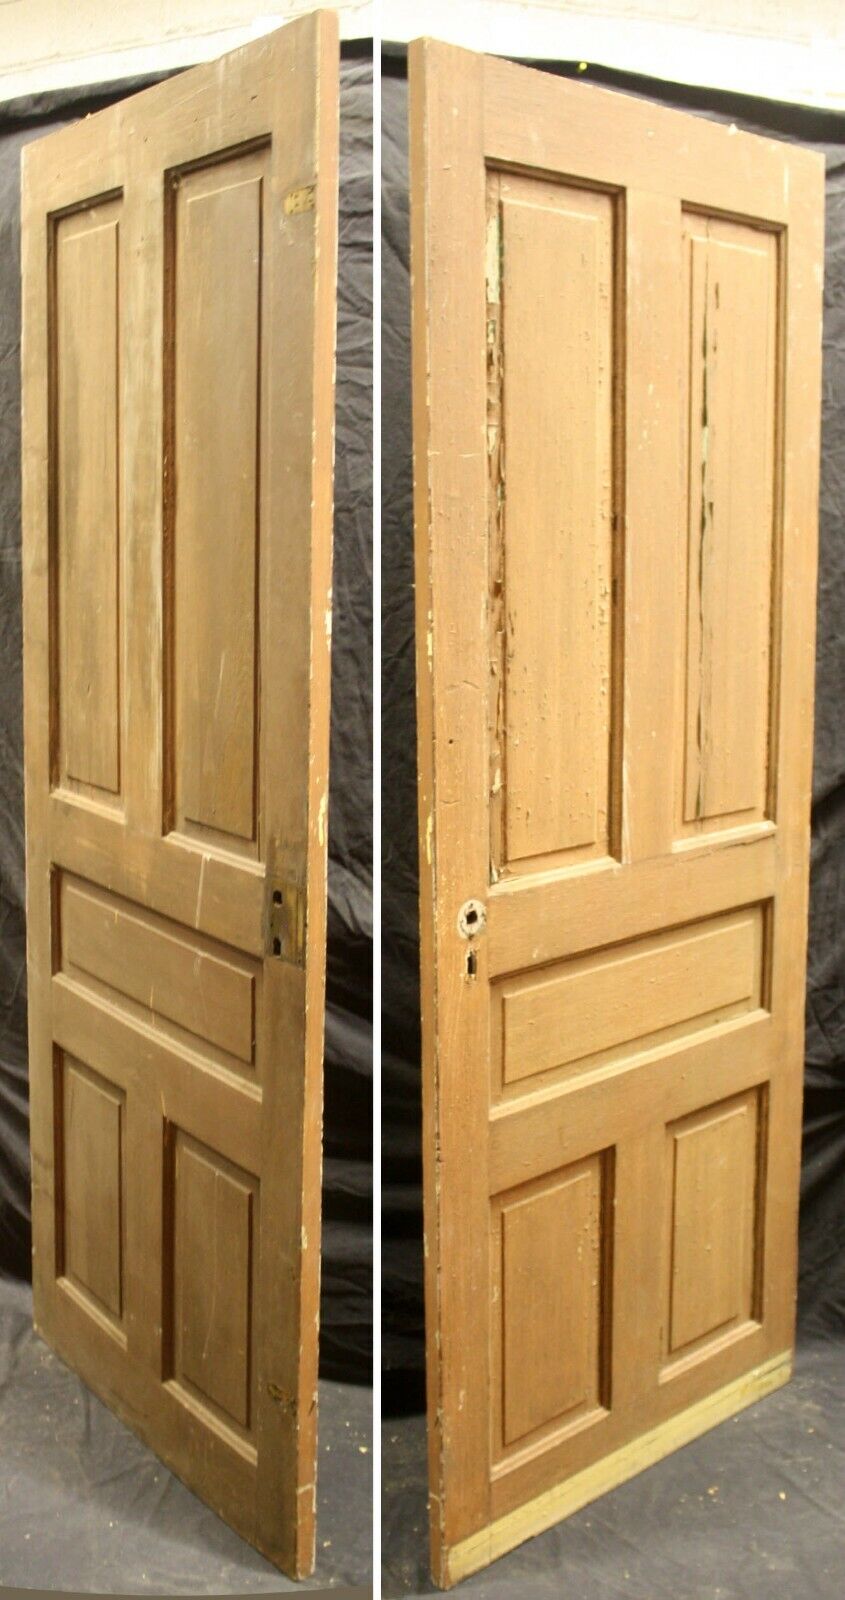 30"x77" Antique Vintage Old Reclaimed Salvaged Victorian Interior SOLID Wood Wooden Door 5 Panels